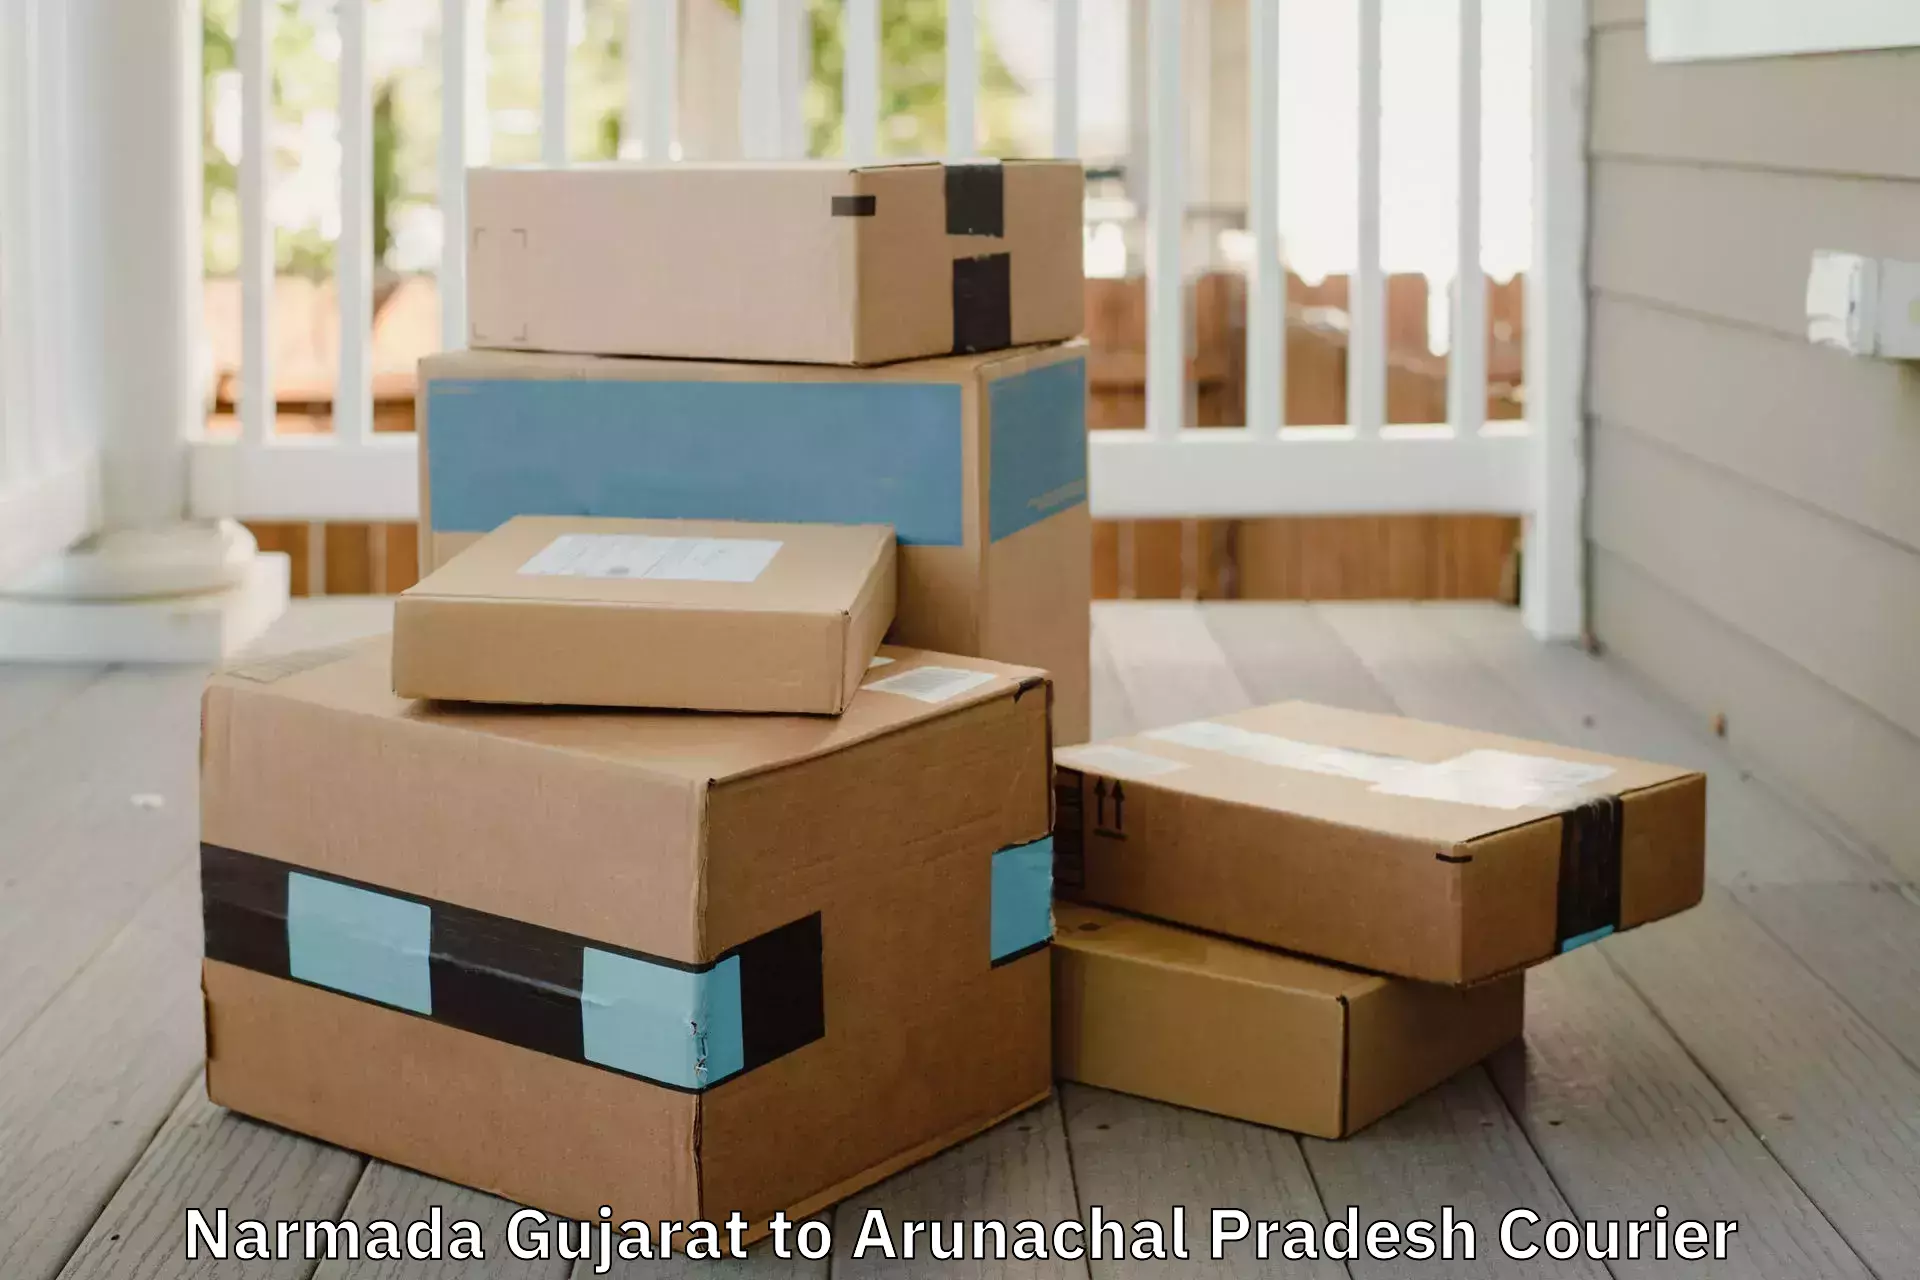 Trusted moving company Narmada Gujarat to Arunachal Pradesh